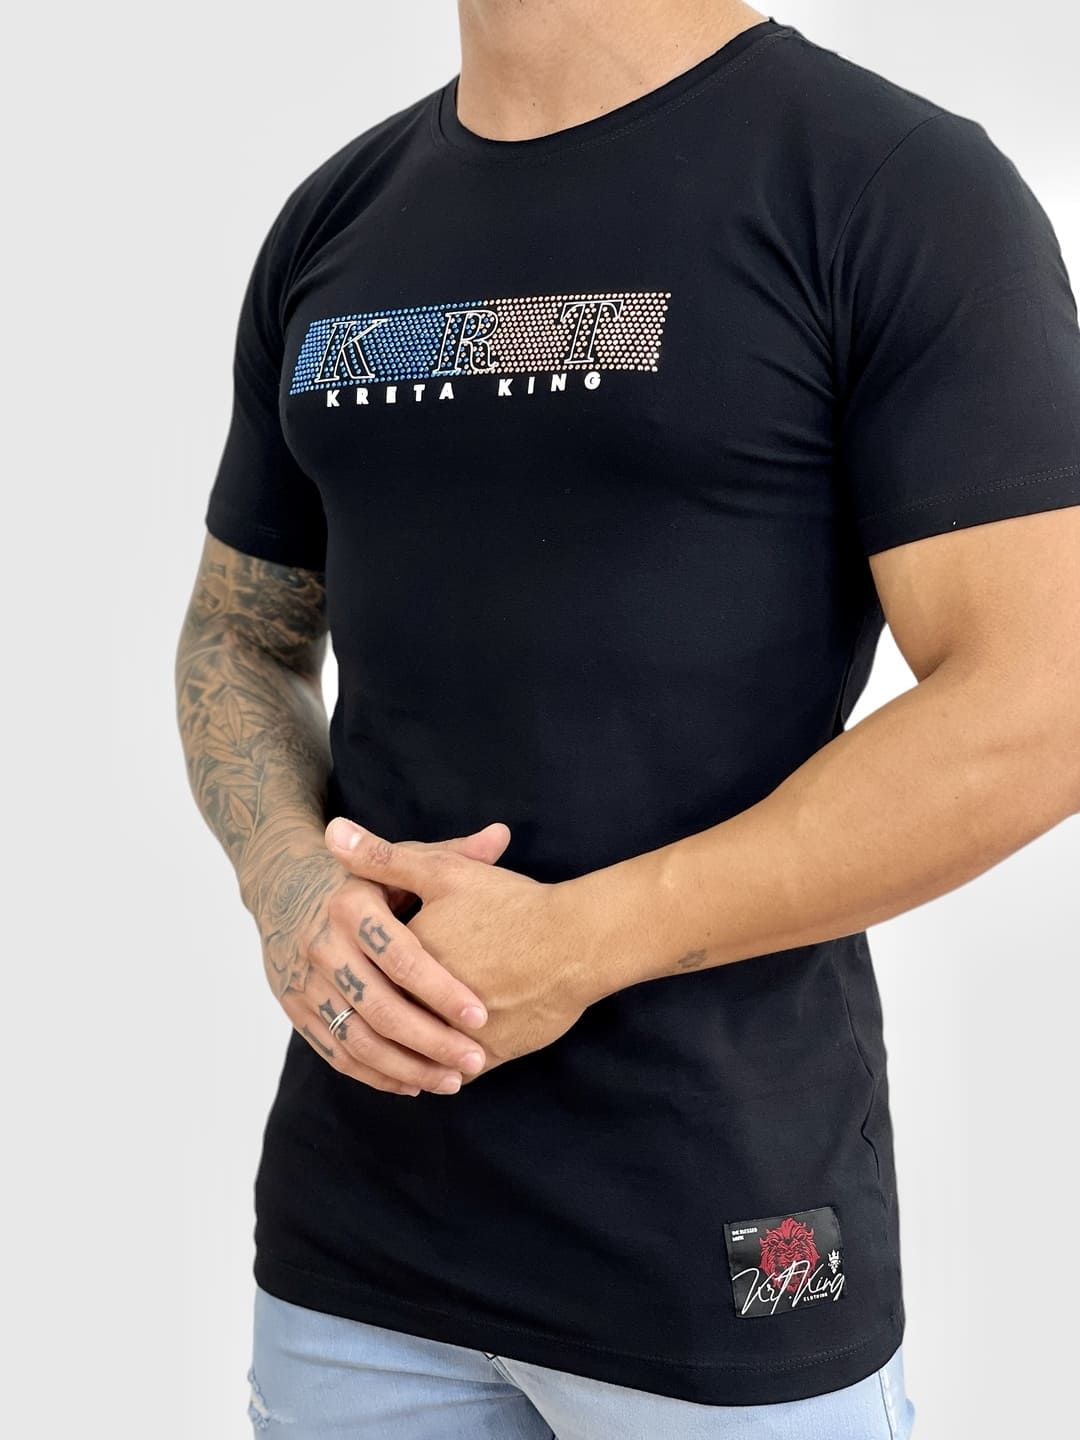 Camiseta Longline Masculina Preta Caveira e Cobra Pedraria - Imperium Store